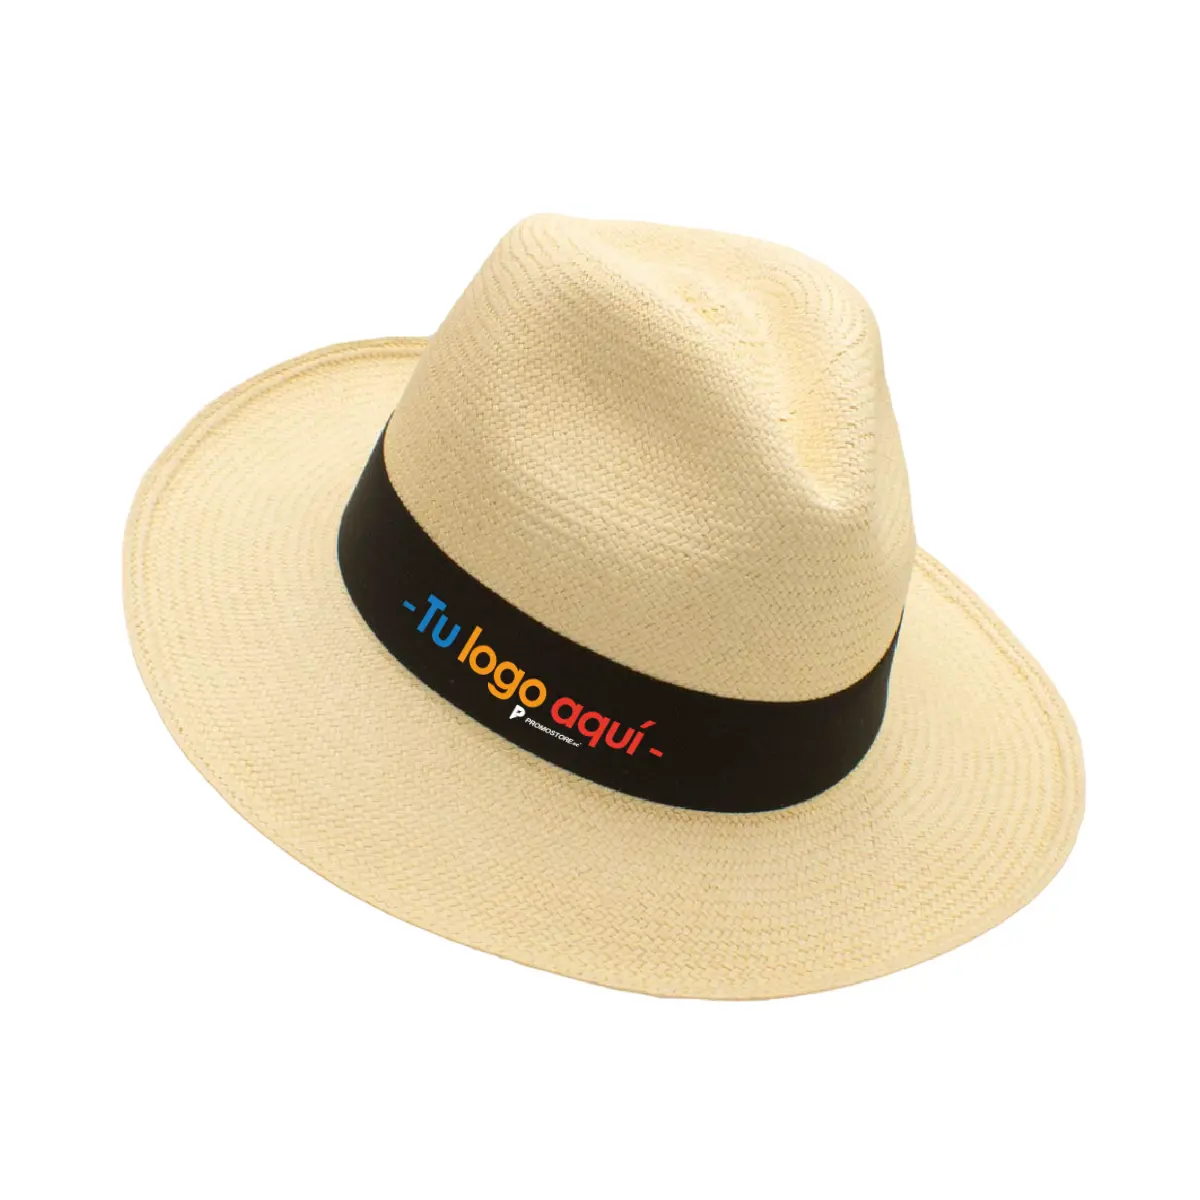 TXSM0002-Sombrero-Toquilla